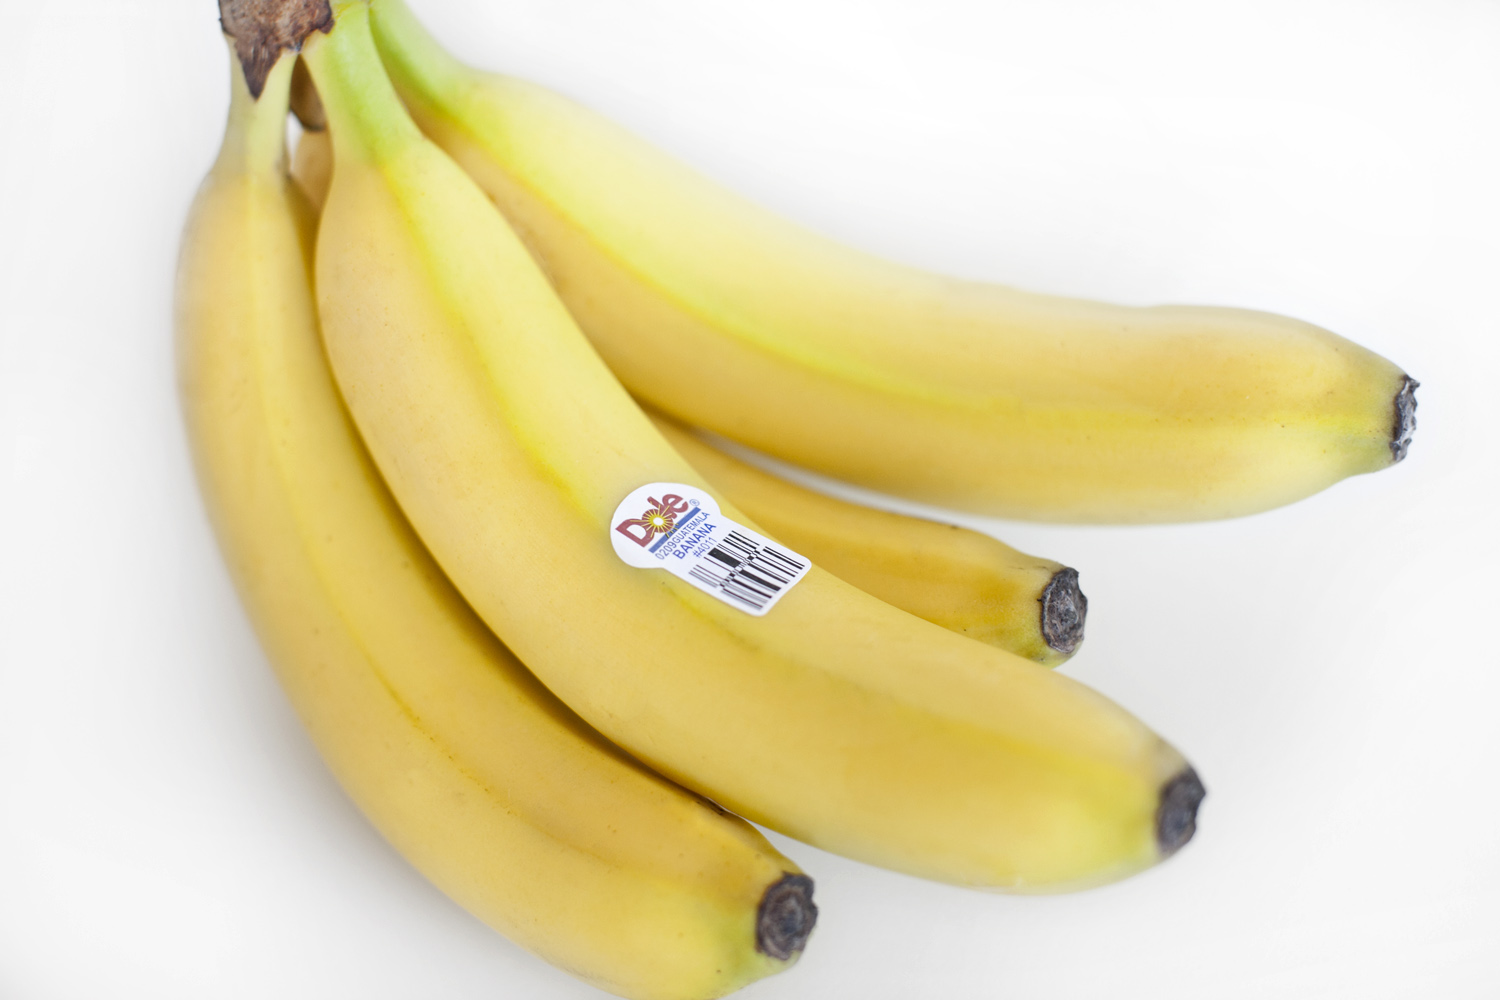 DOLE Bananas